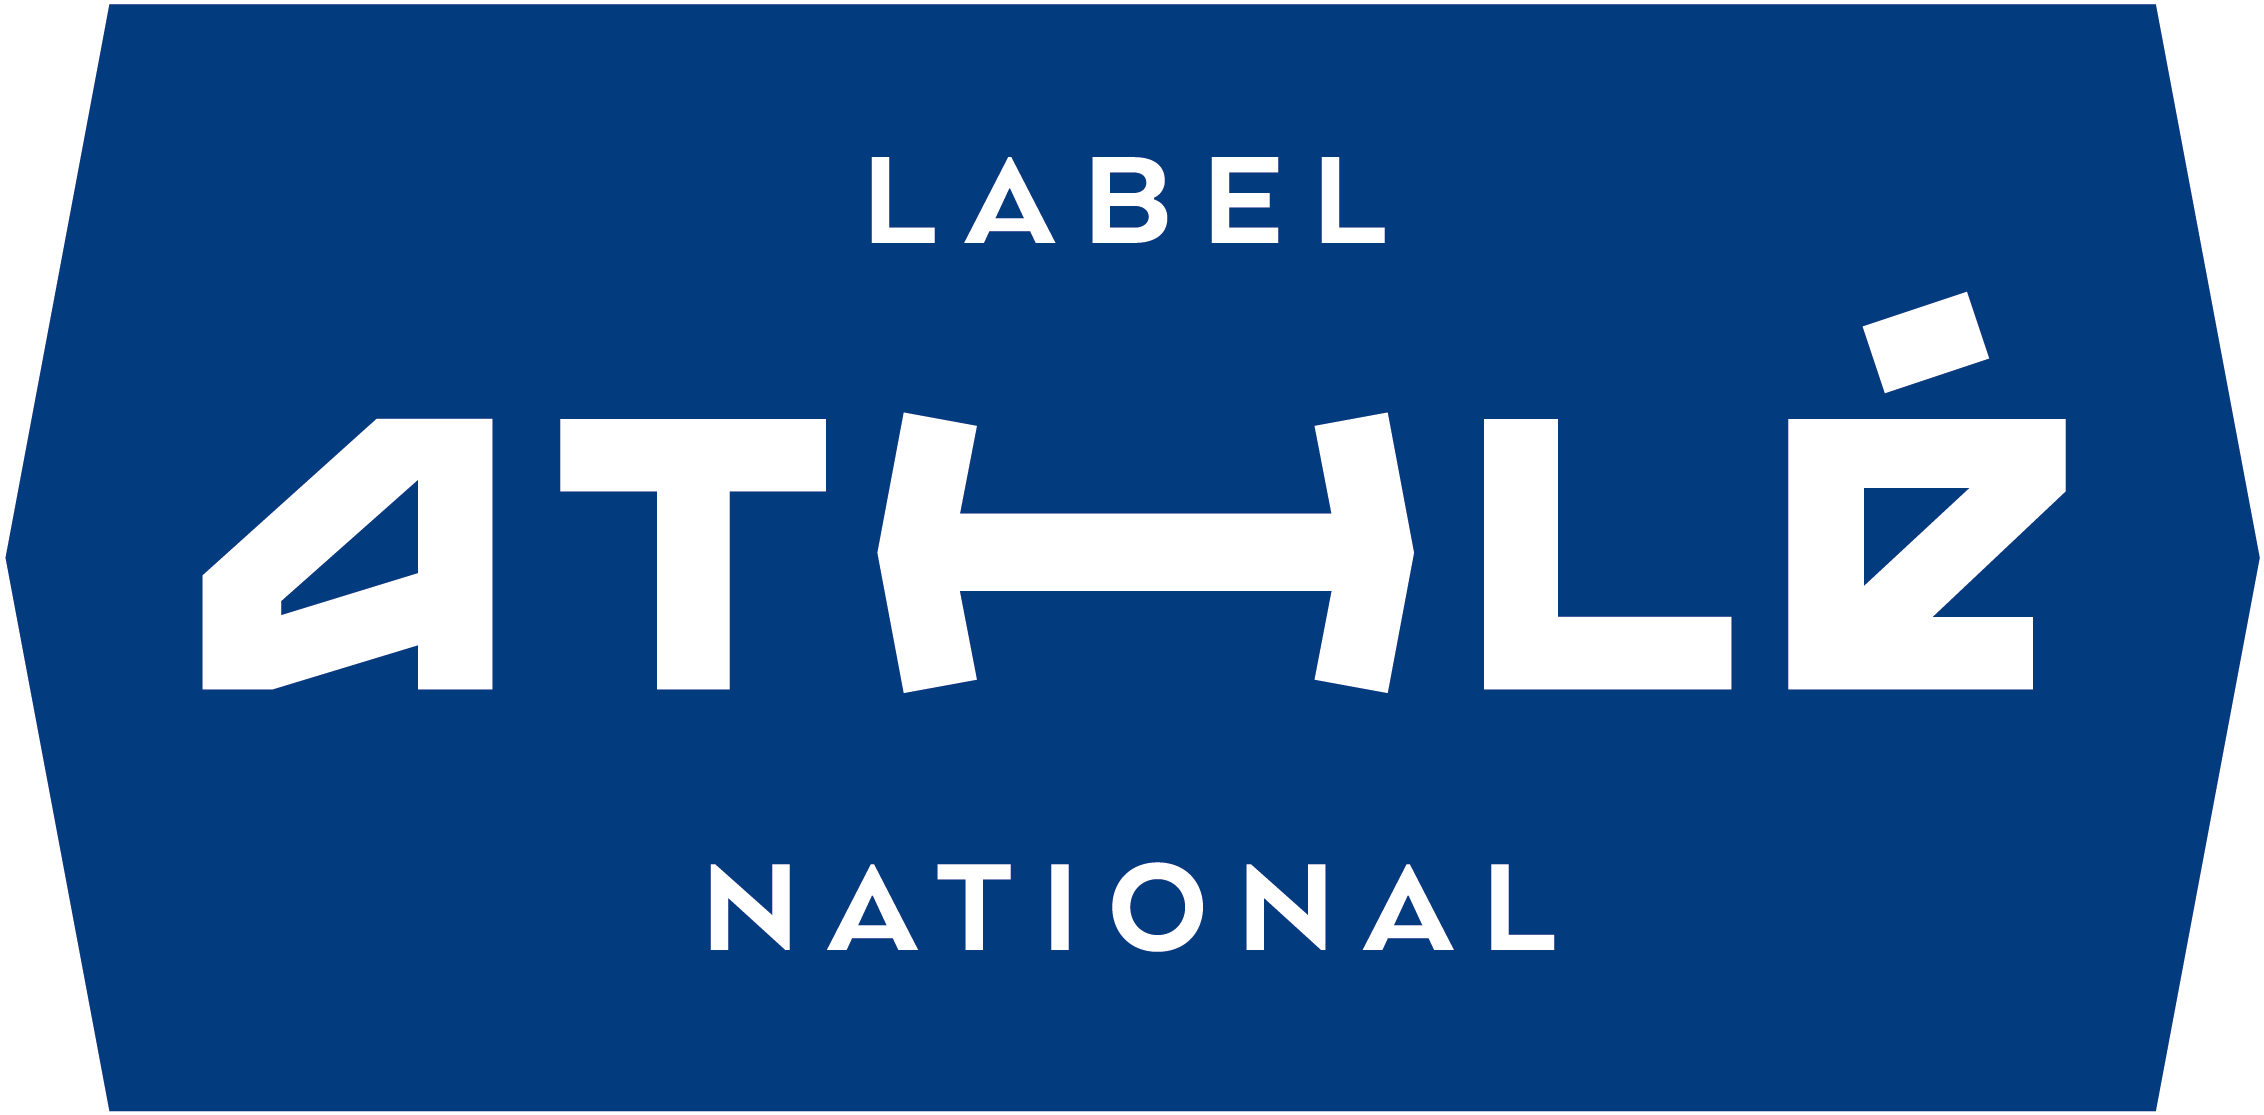 Label_National_ATHLE-Bleu.png